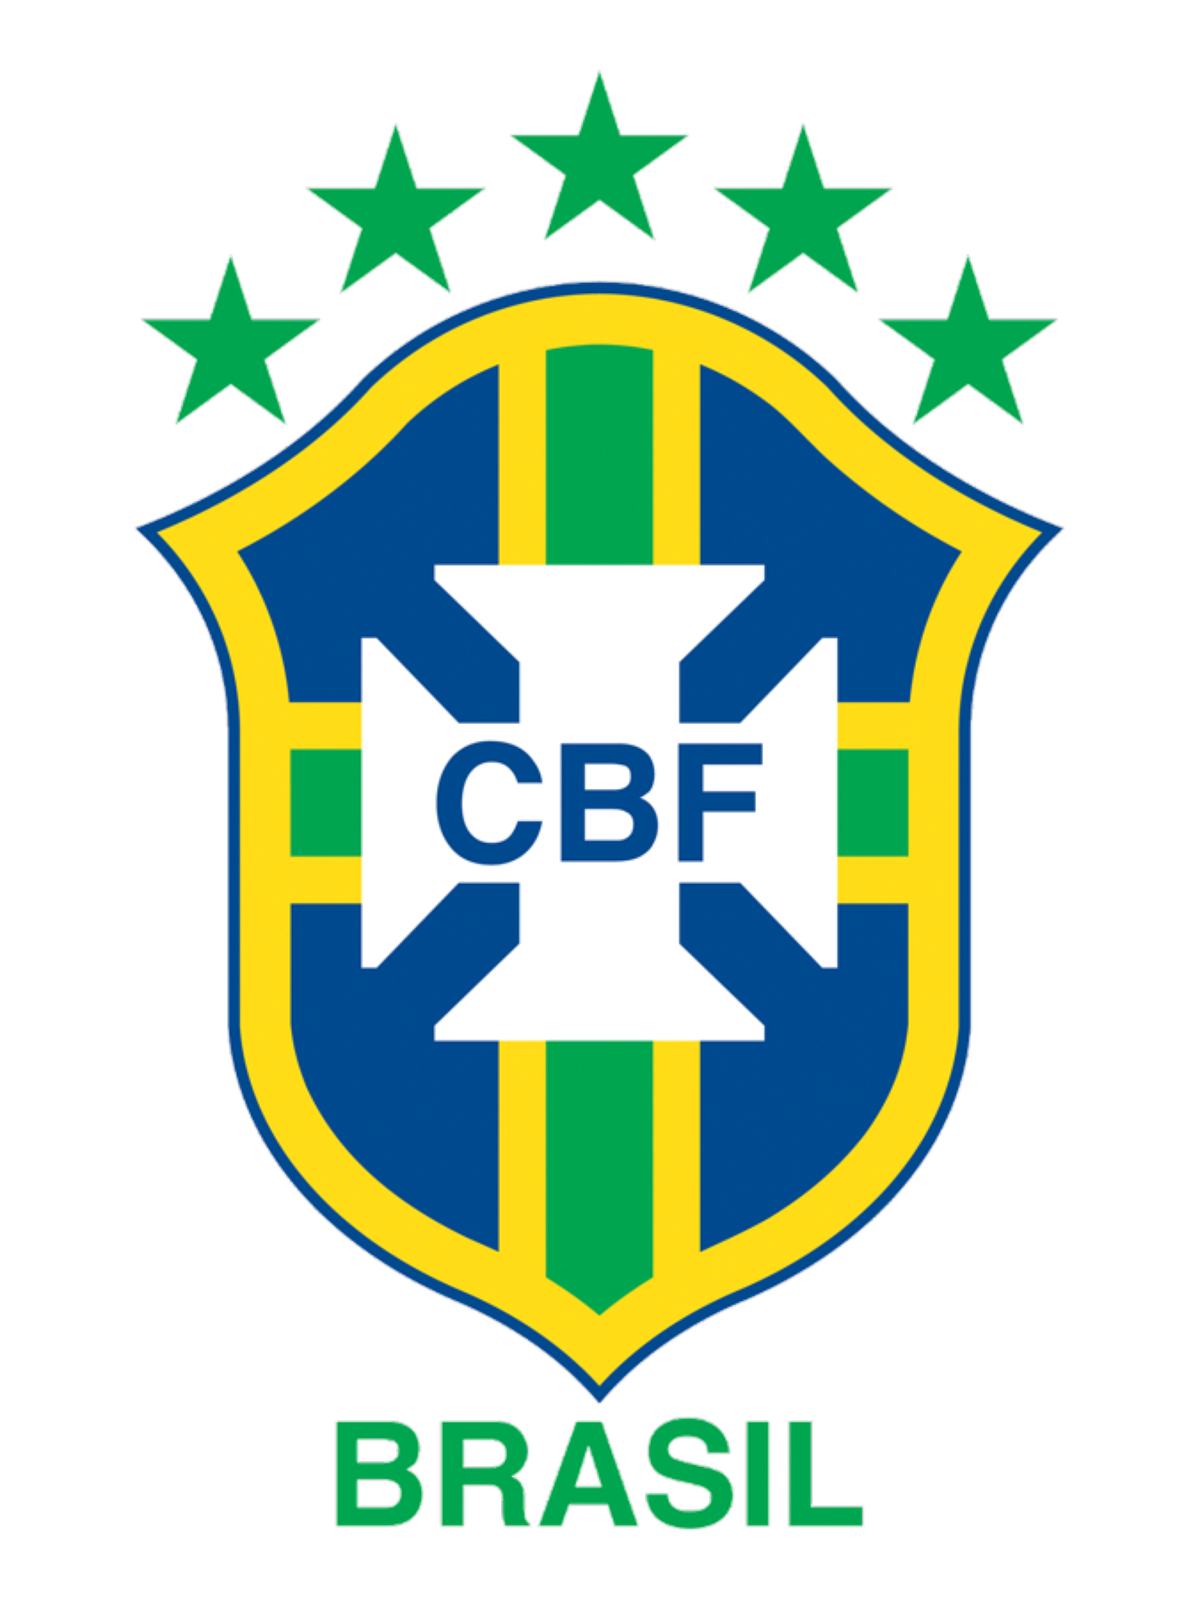 Hack Brazil National Team Dream League Soccer 2019 